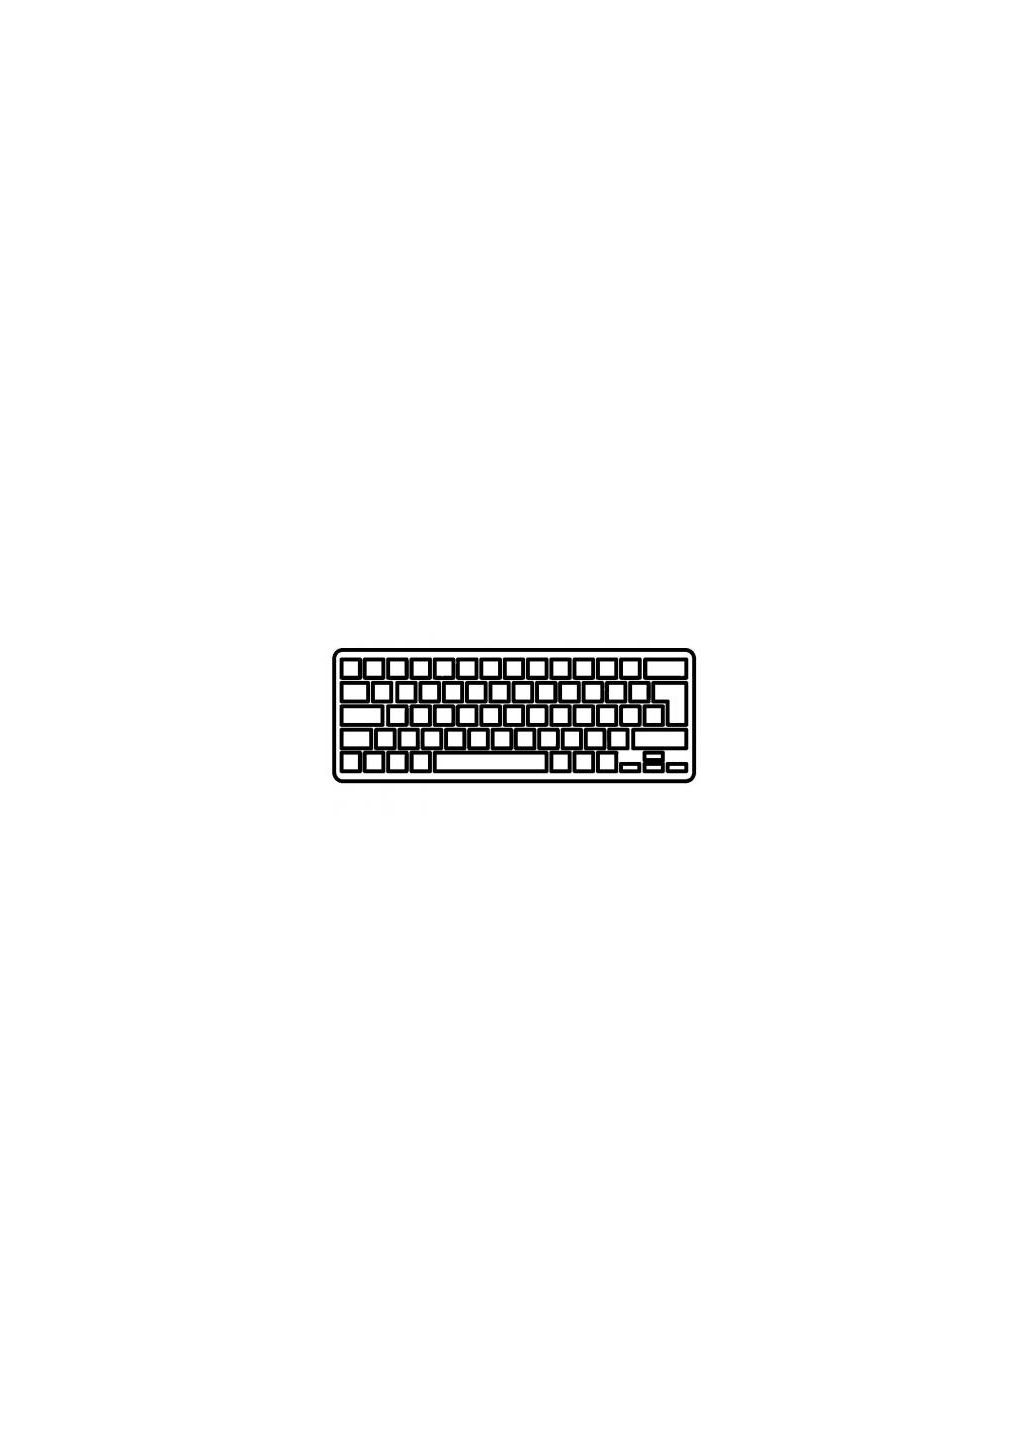 Клавиатура ноутбука (A43336) MSI s11/s420/s425/s430/s450/m645/m655/m660/k1 белая ua (276706532)